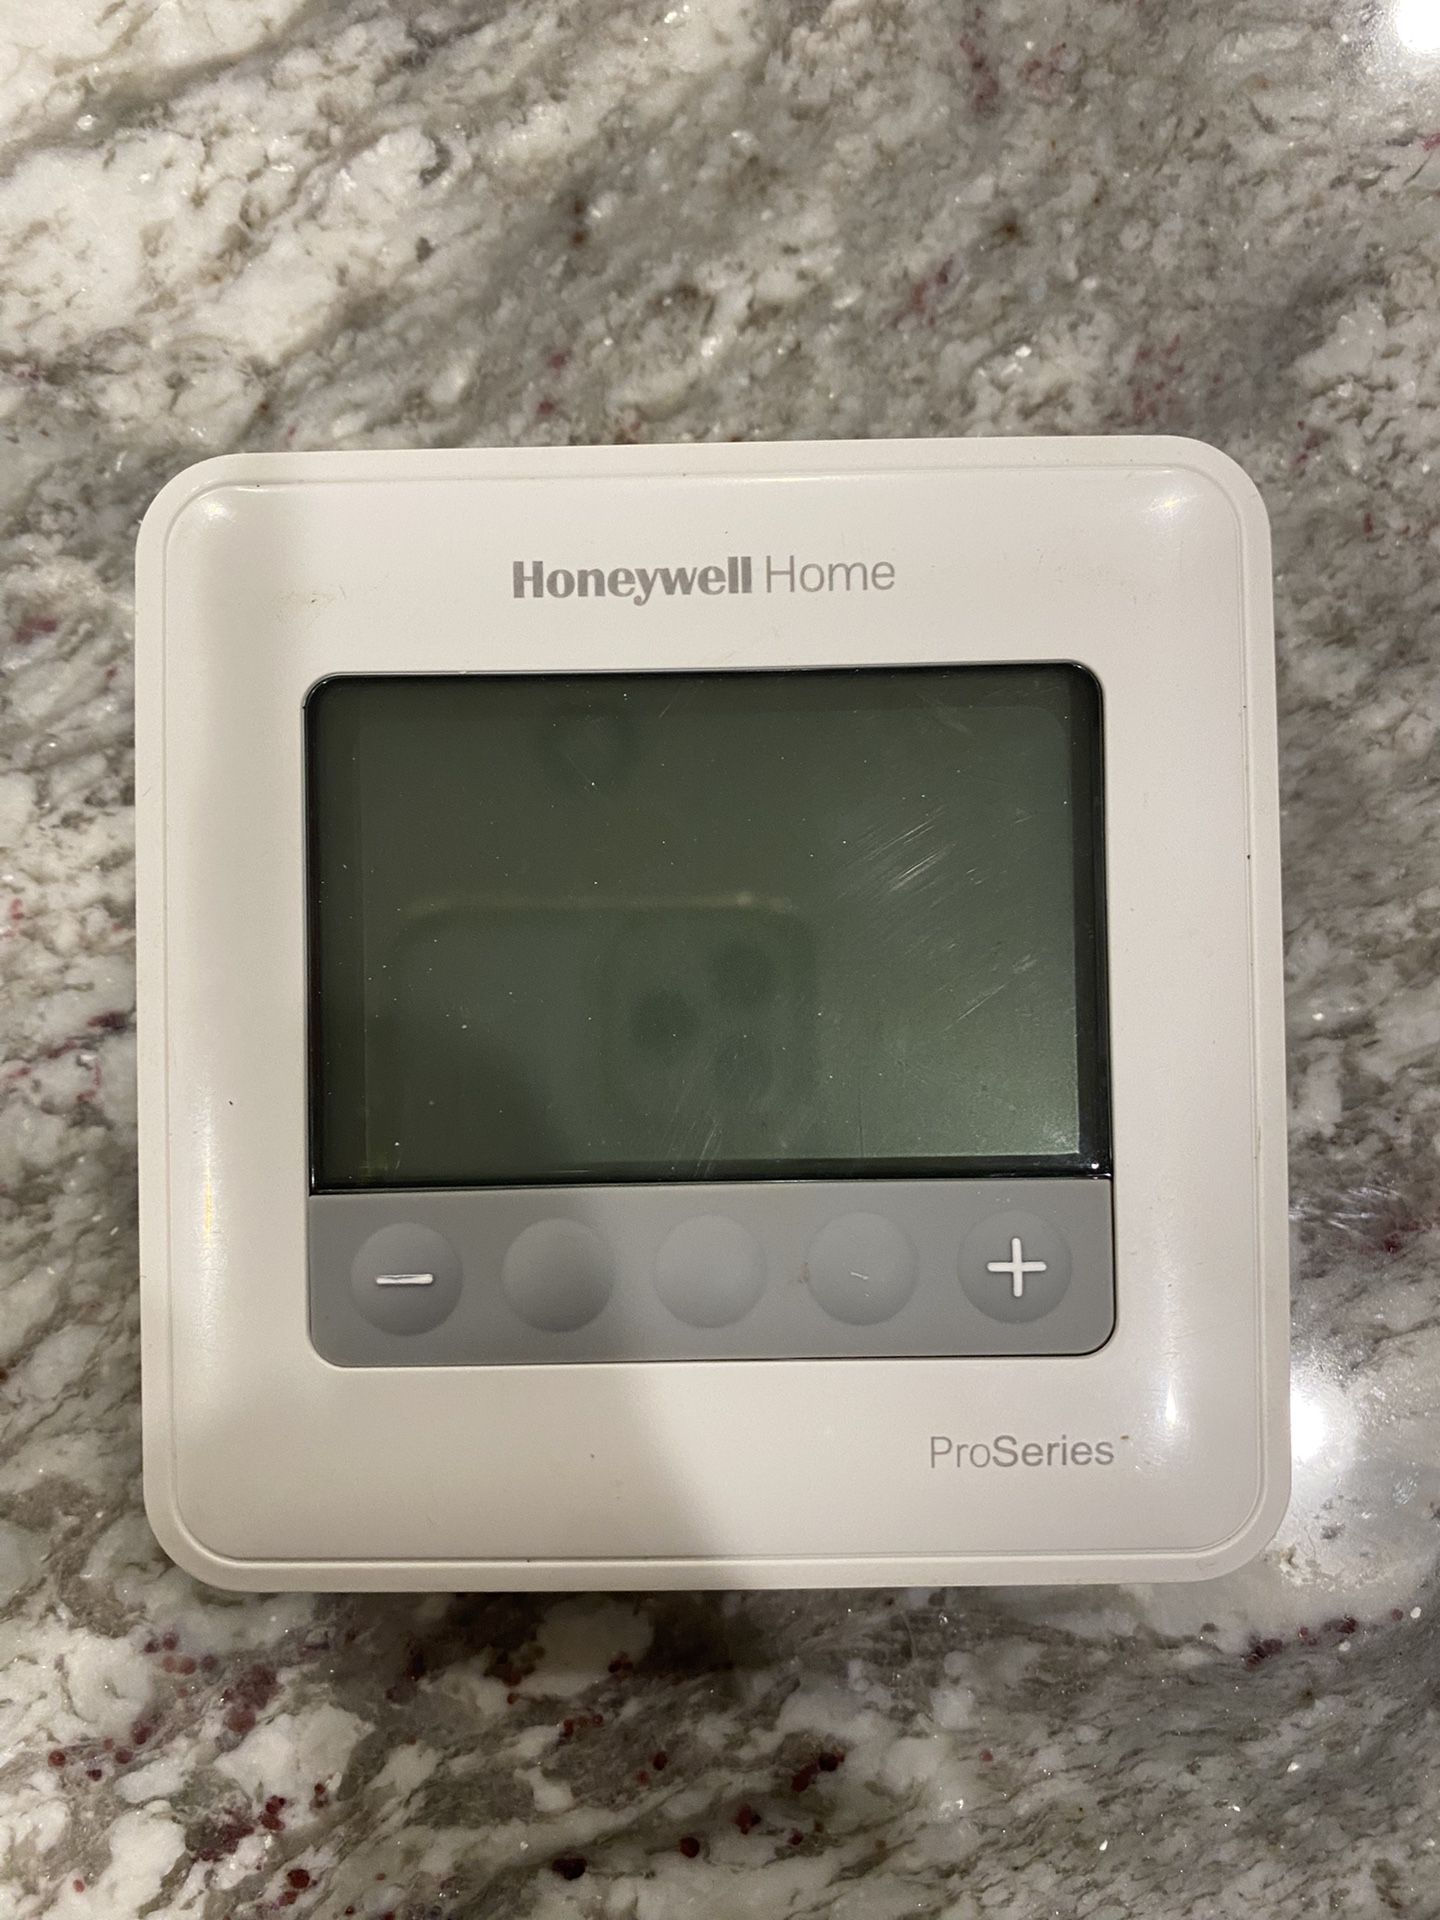 Honeywell Home pro series Thermostat